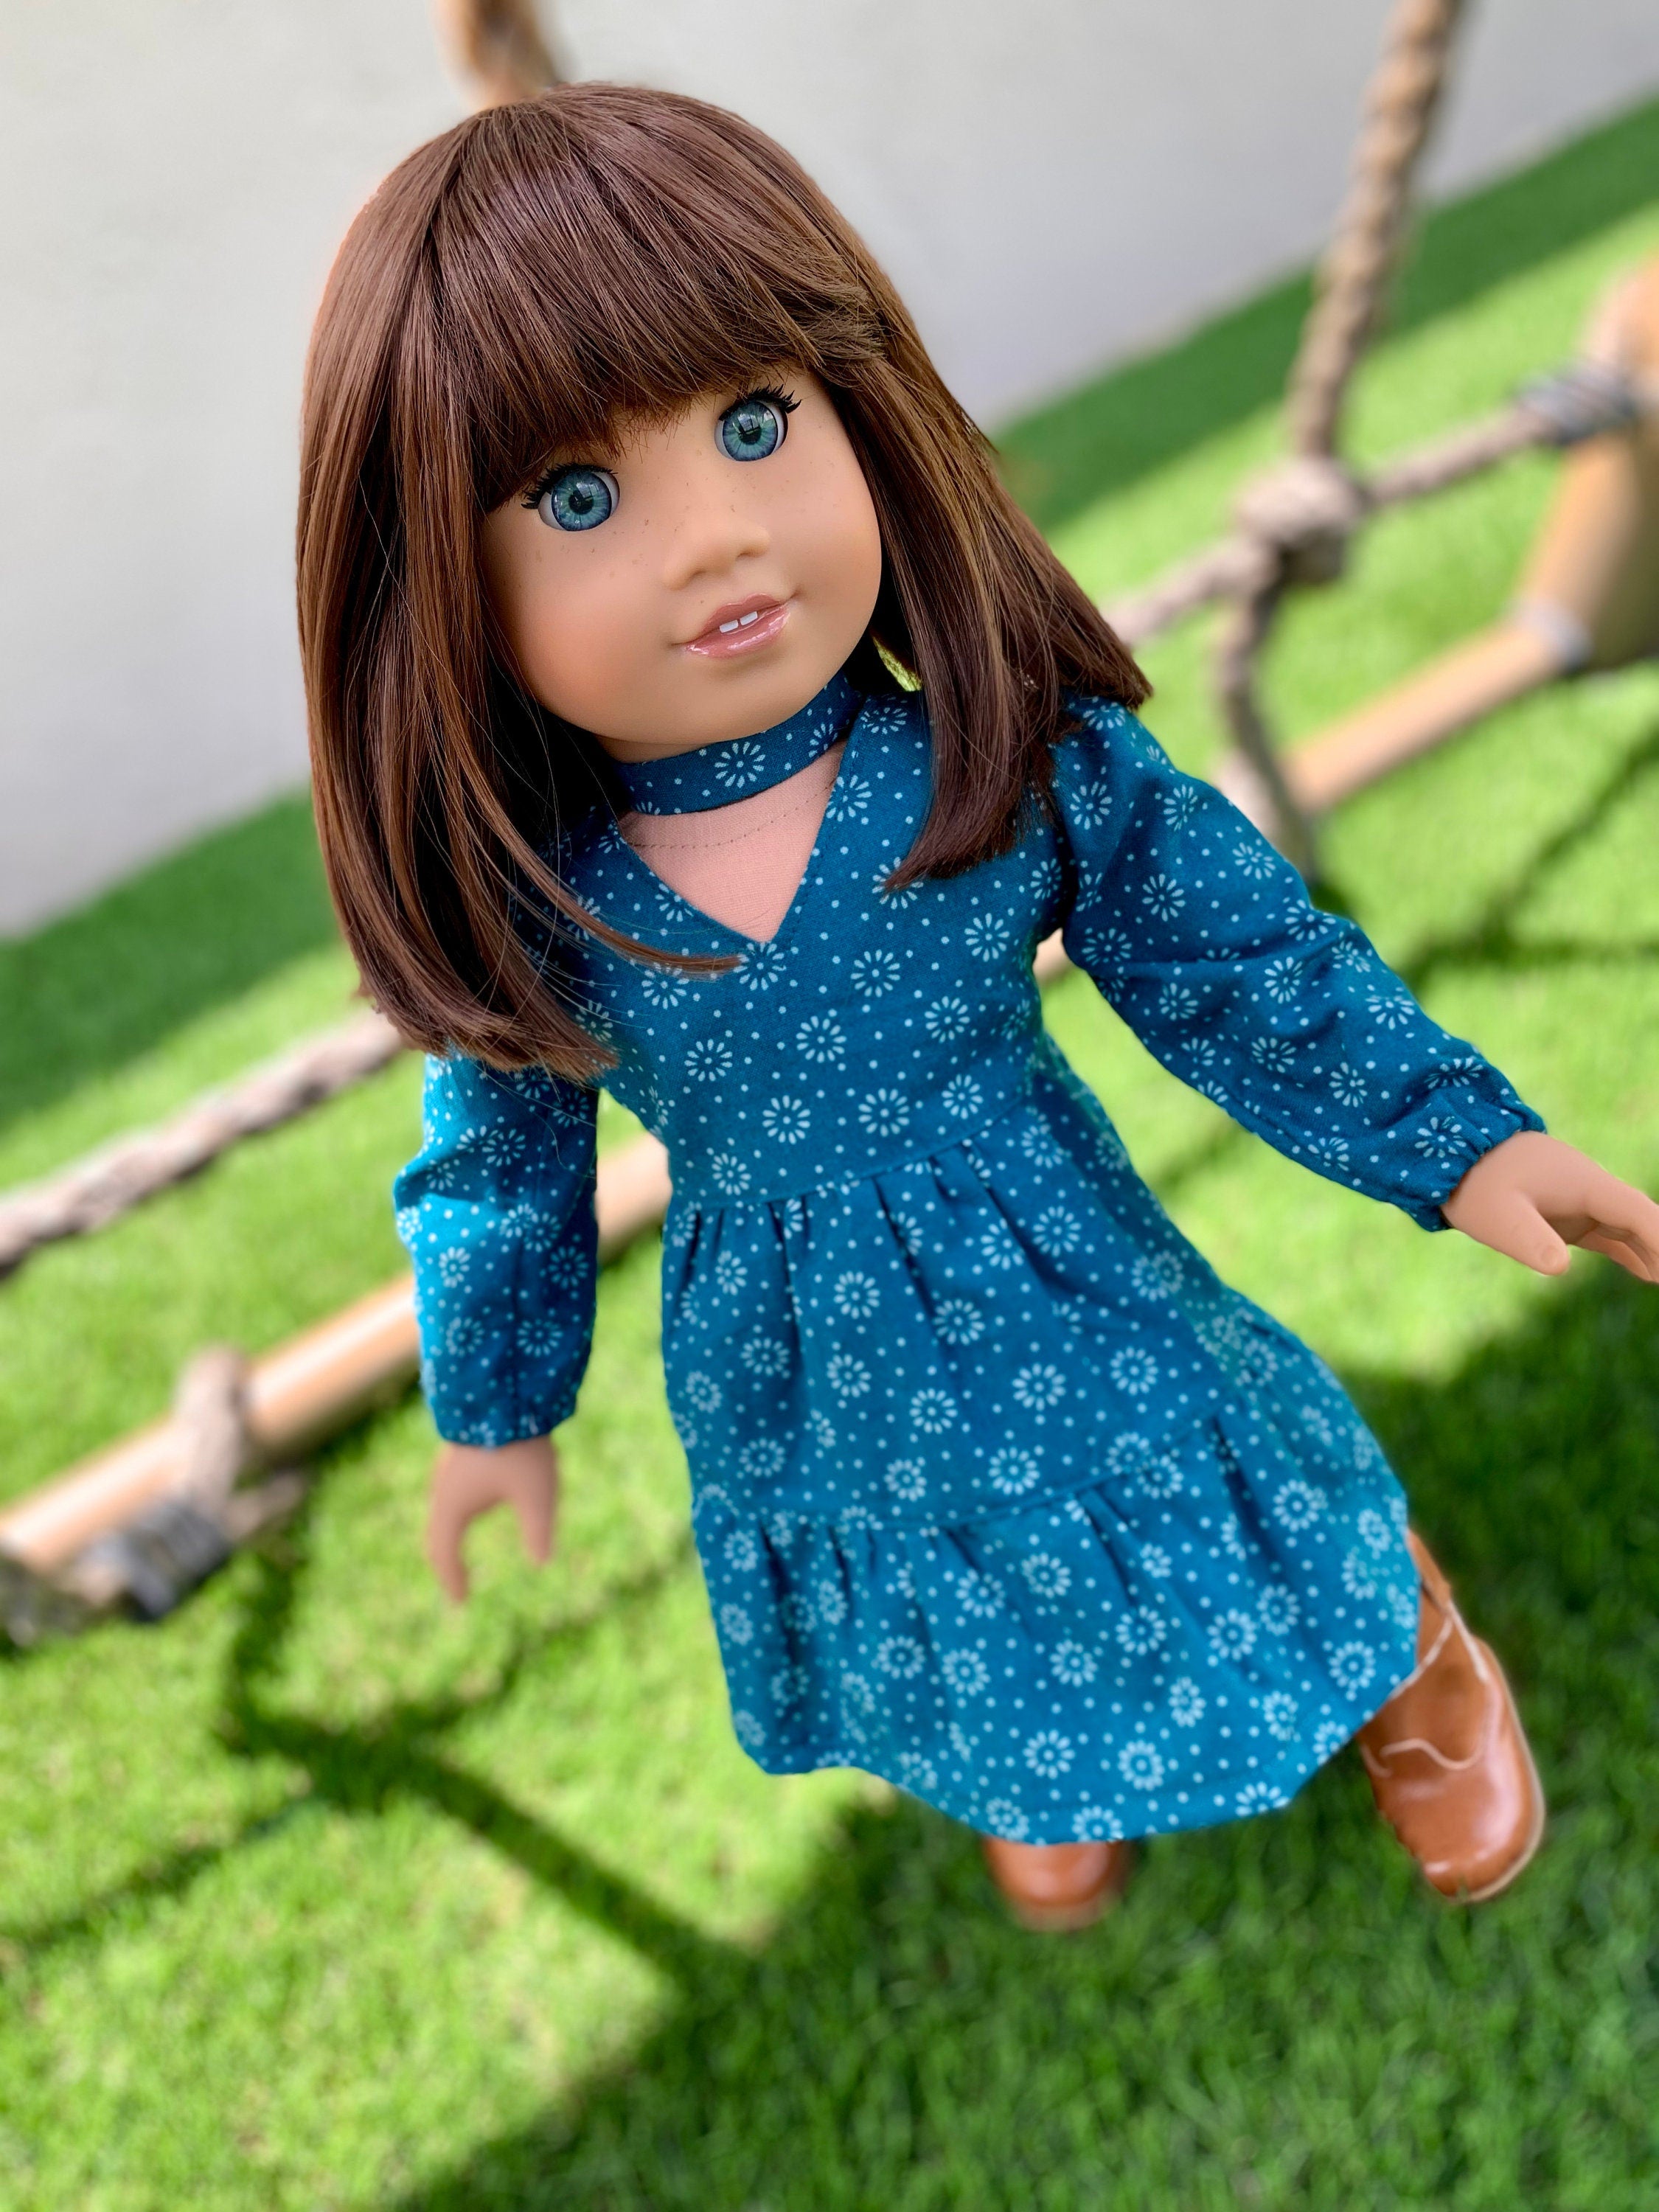 Custom doll wig for 18" American Girl Dolls -Heat & Tangle Resistant - fits 10-11" size of 18" dolls OG Blythe BJD Gotz dark brown bangs